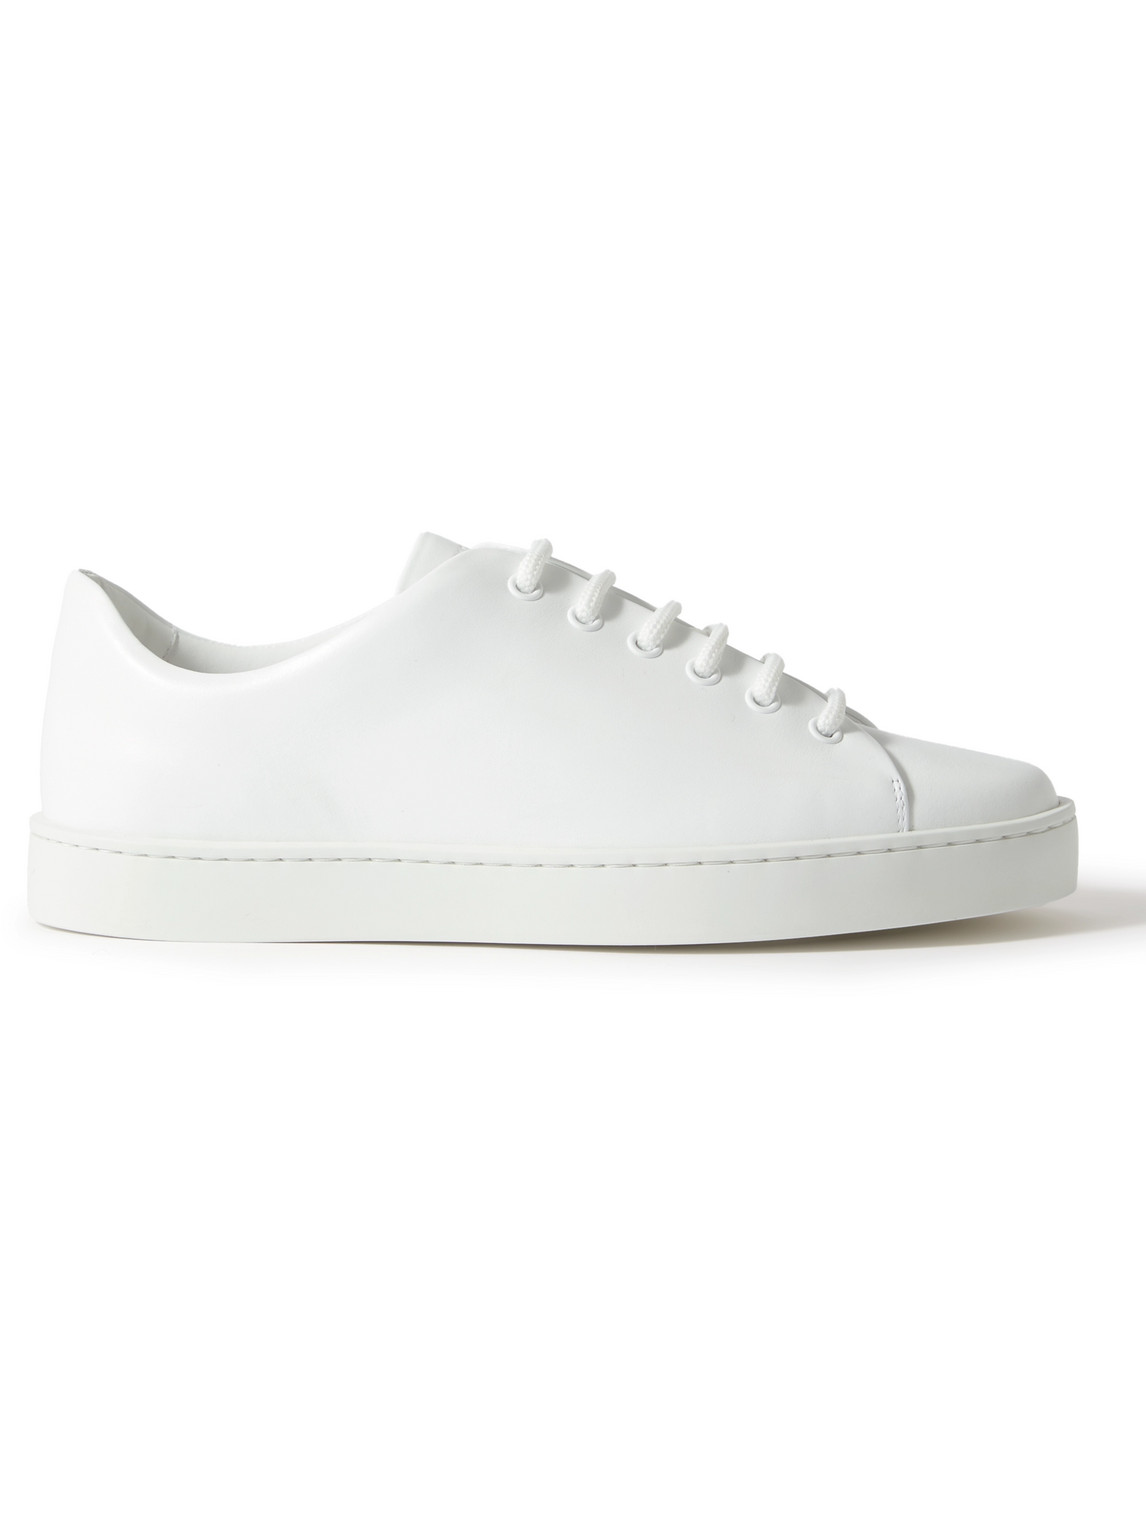 Manolo Blahnik Semanado Leather Sneakers In White